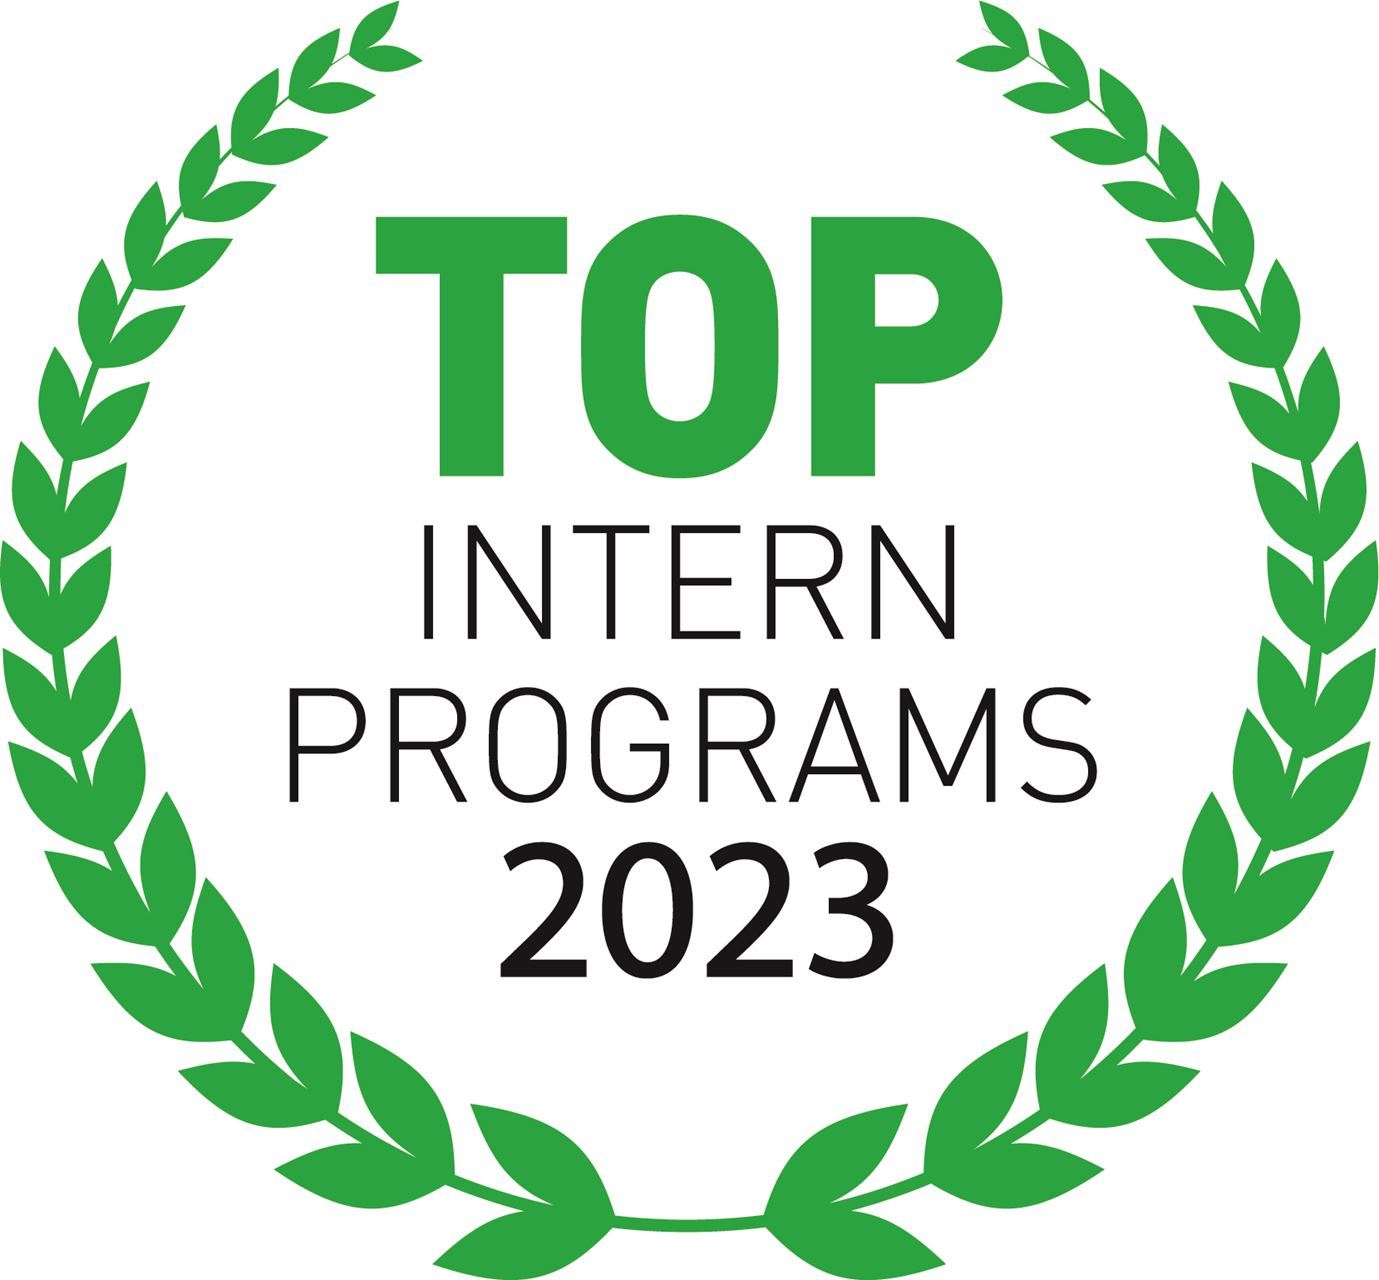 Top Intern Programs Award 2023